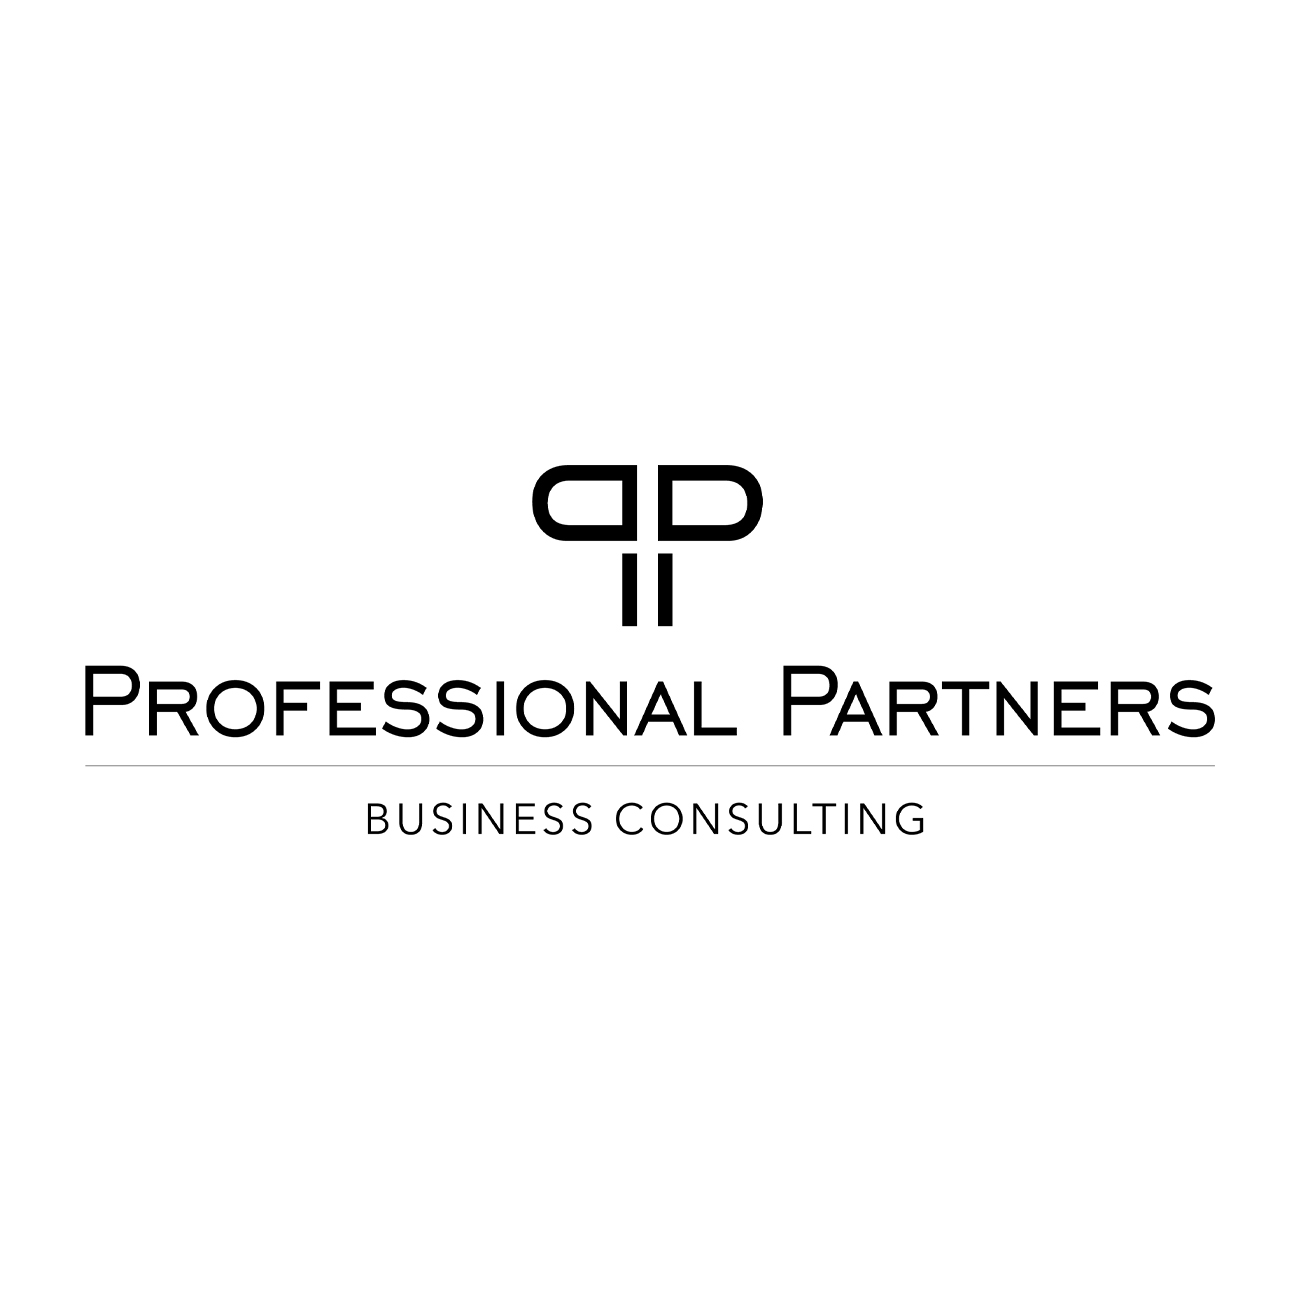 Professional Partners